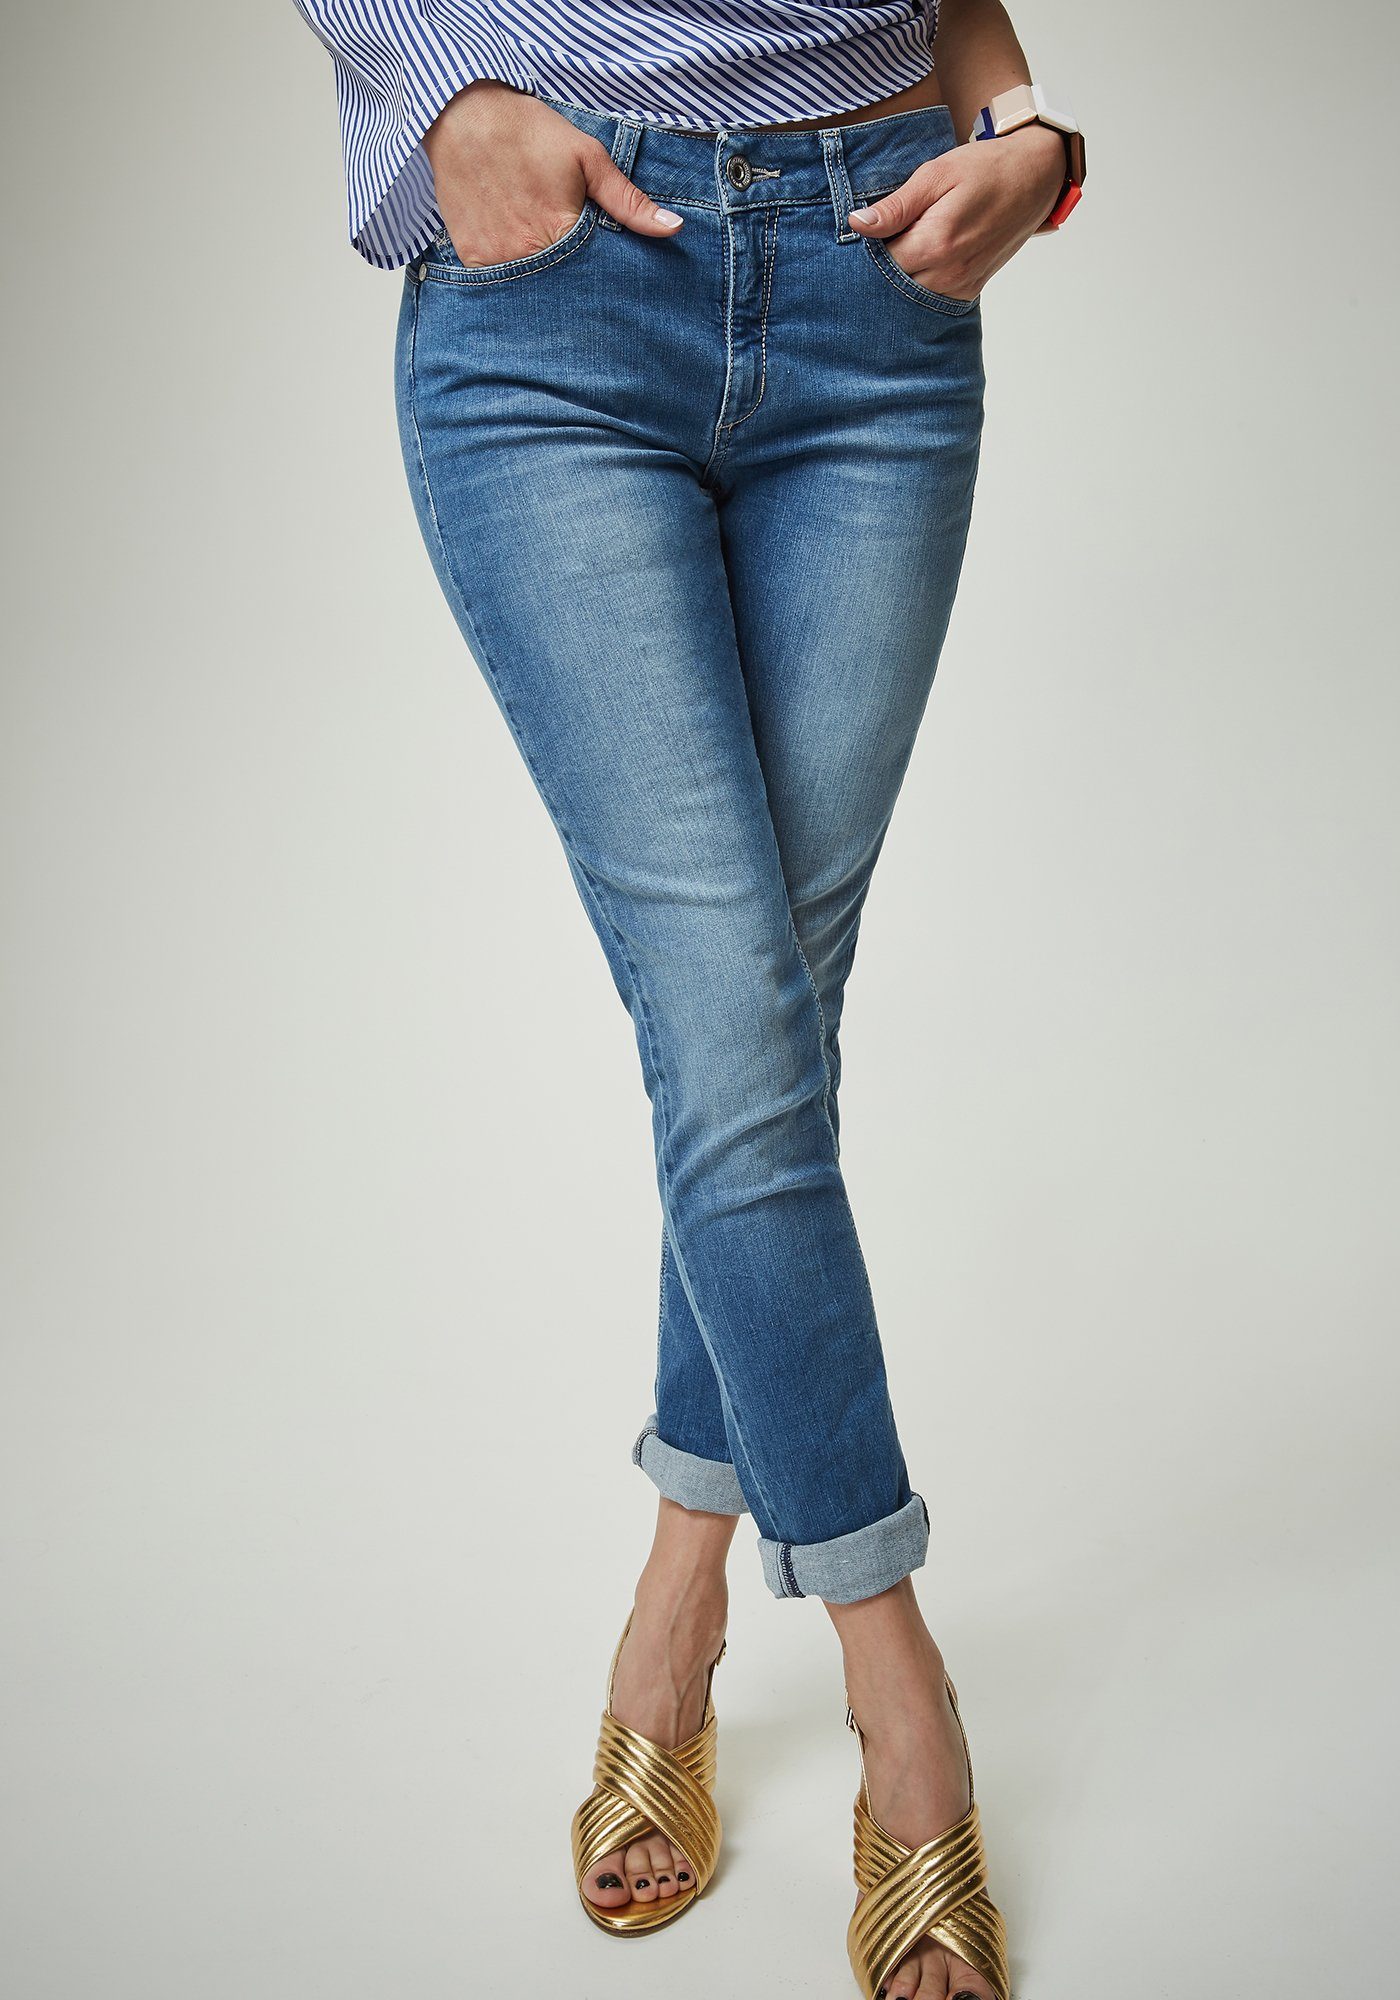 Otto - Pierre Cardin NU 15% KORTING: PIERRE CARDIN Jeans mit Glitzernieten - Skinny Fit My Favourite